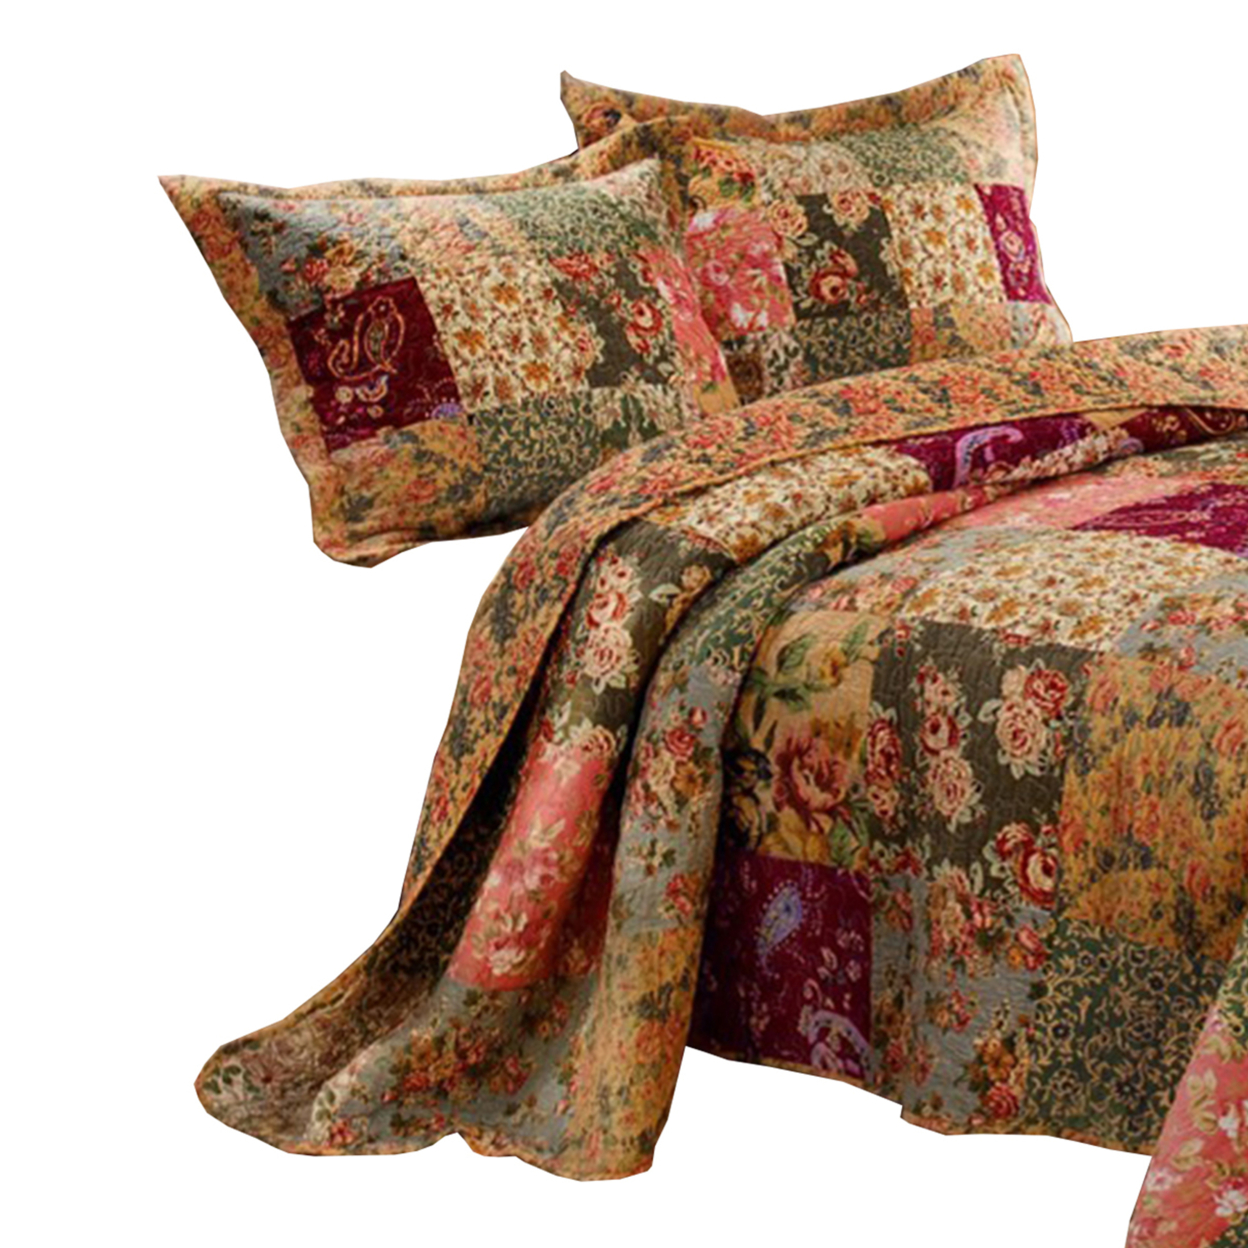 Kamet 3 Piece Fabric Full Size Bedspread Set With Floral Prints, Multicolor- Saltoro Sherpi